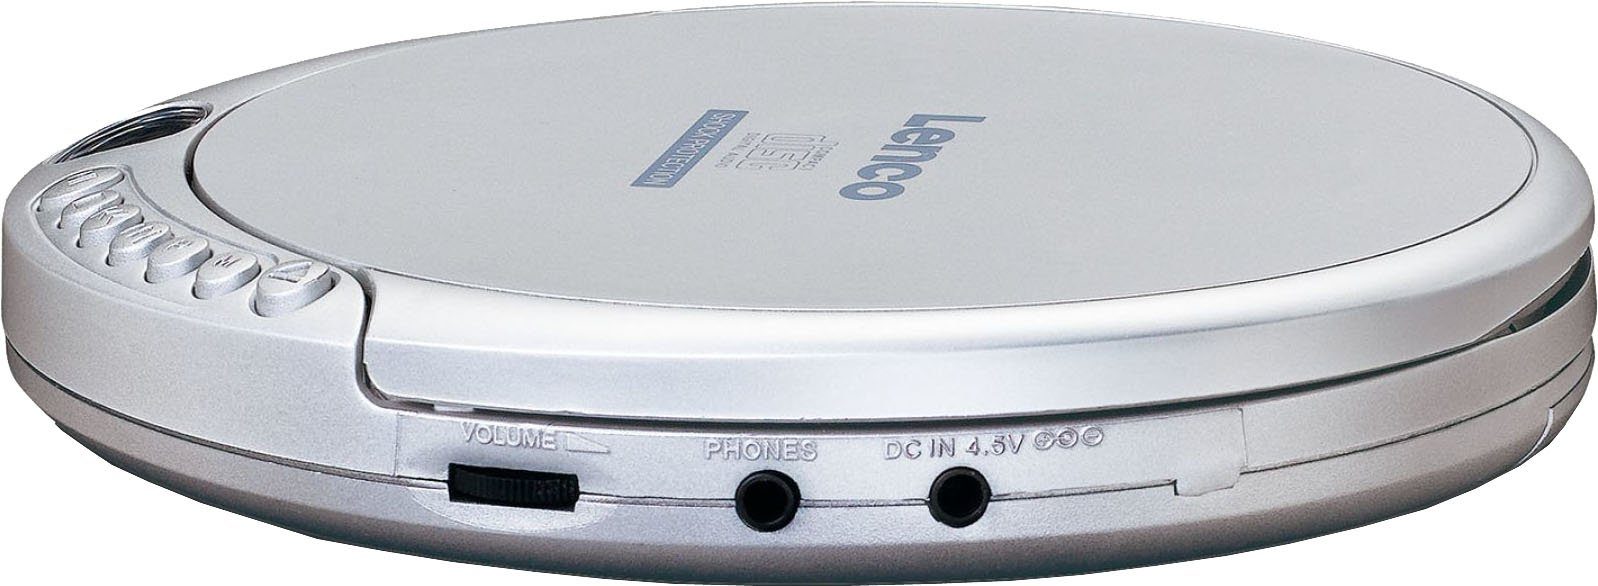 Lenco CD-Player Silber CD-201Sl (Anti-Schock-Funktion)